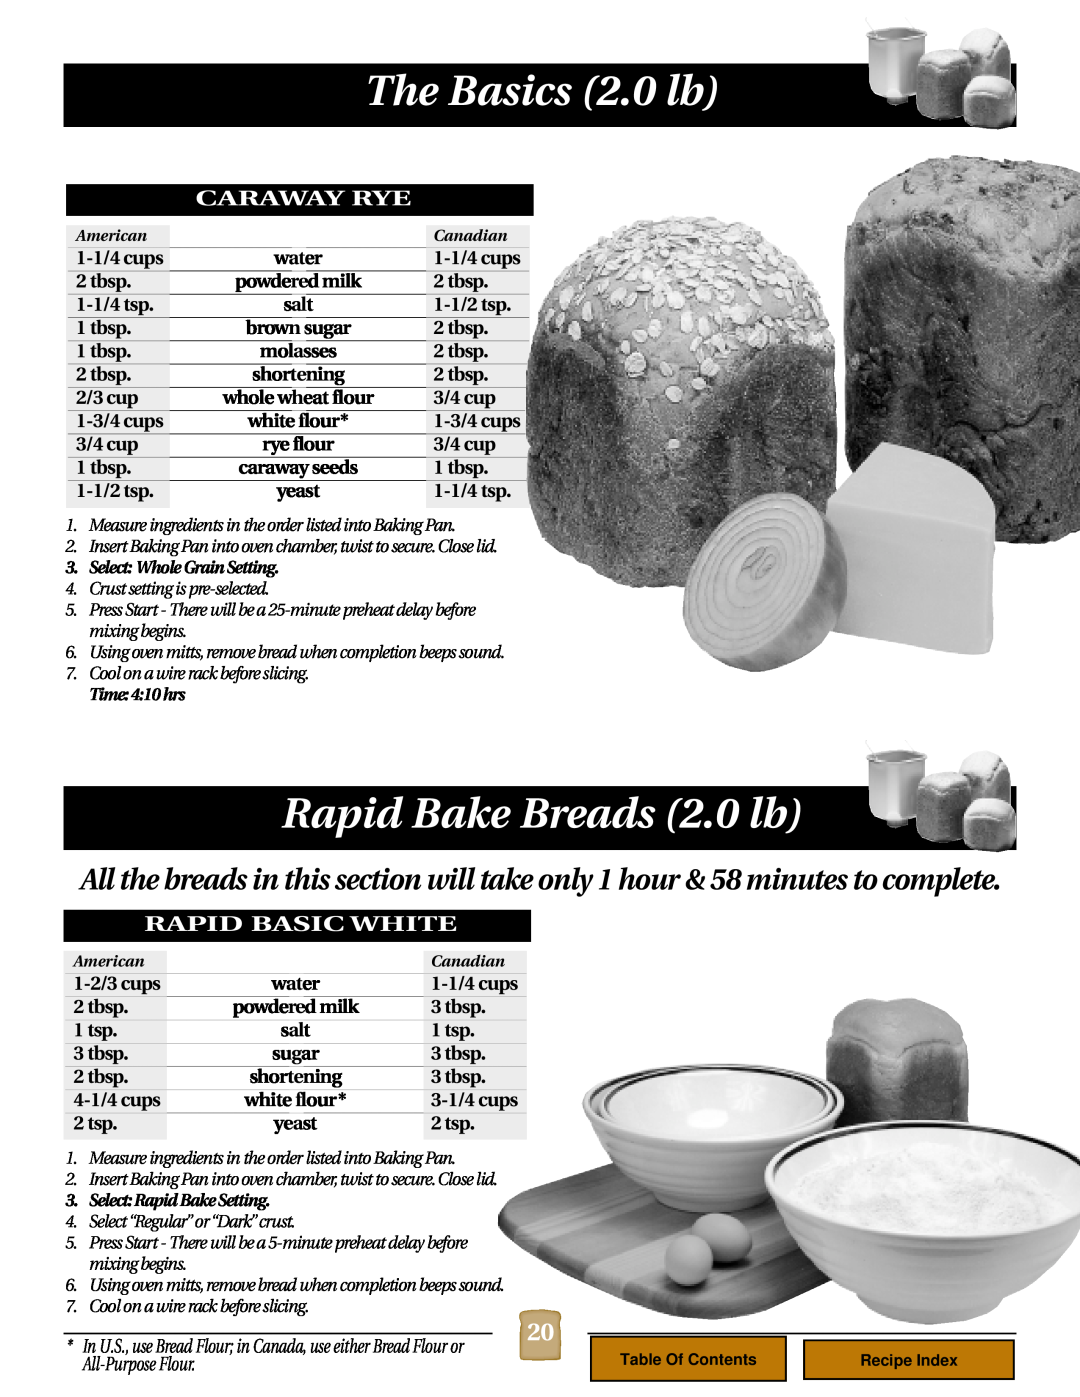 Black & Decker B1620 operating instructions Rapid Bake Breads 2.0 lb, The Basics 2.0 lb, Caraway Rye, Rapid Basic White 